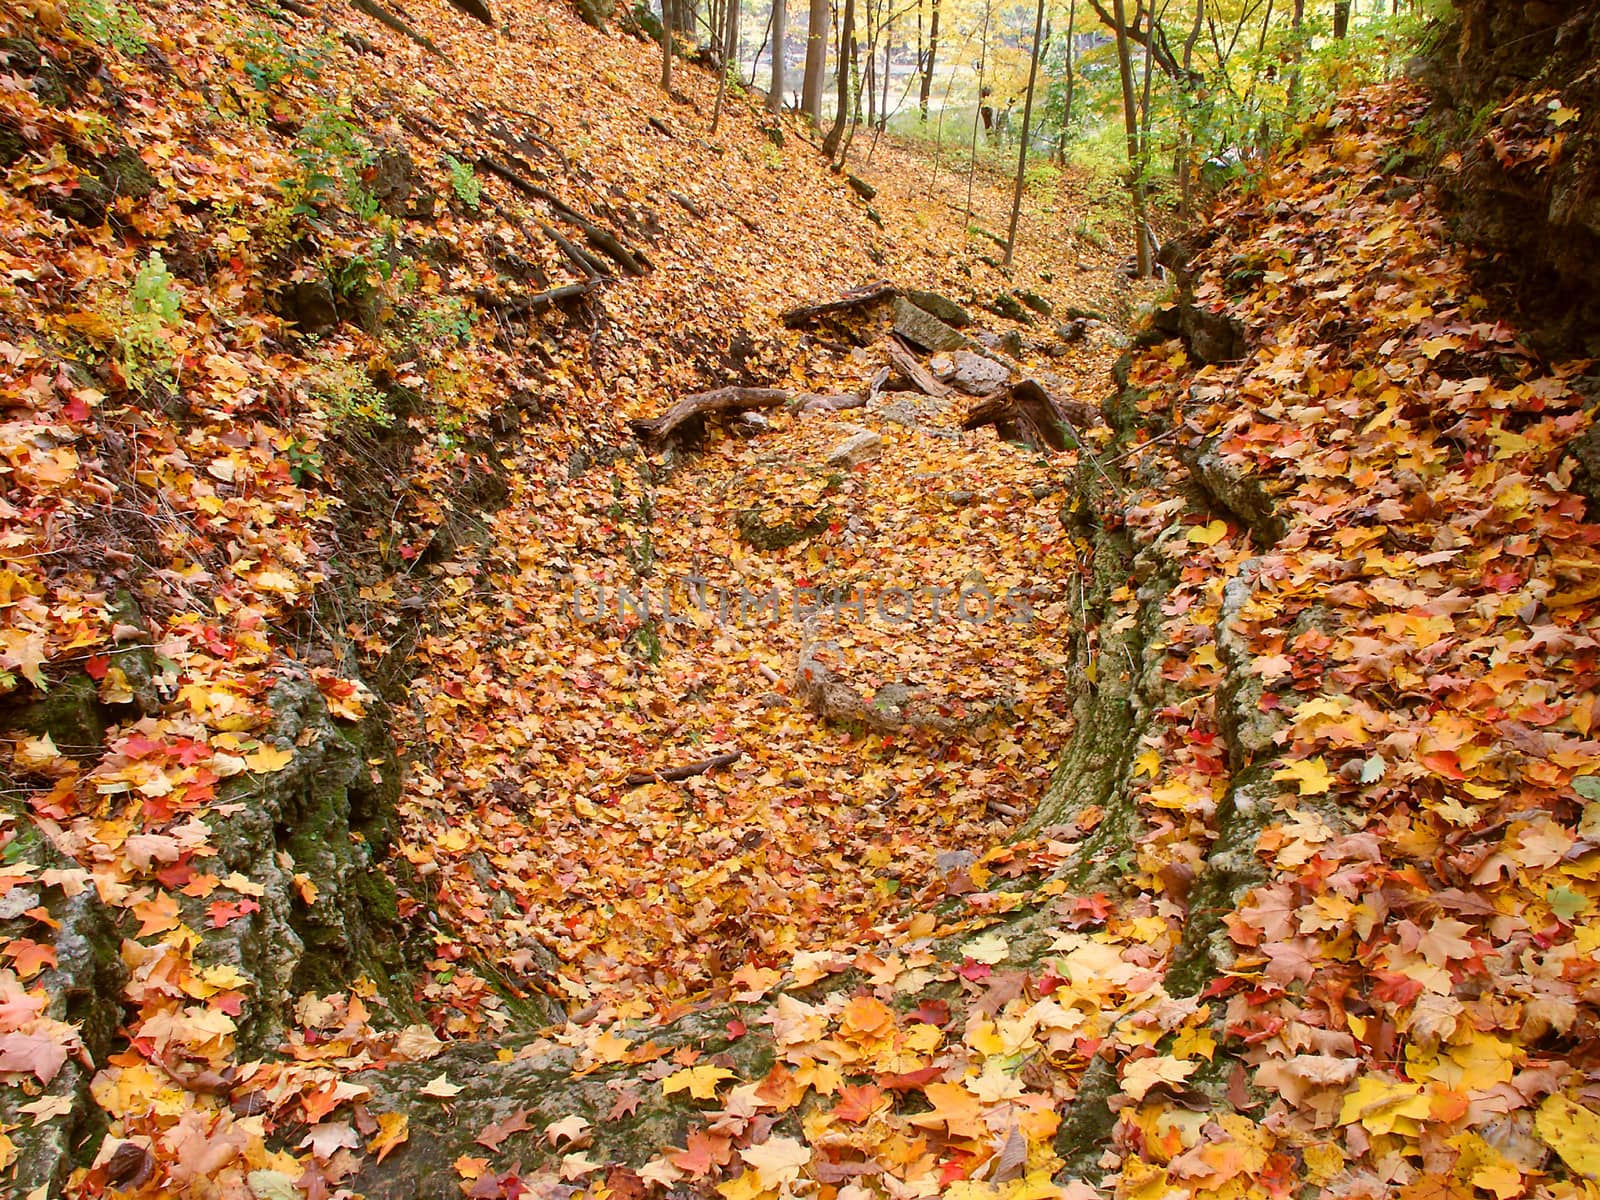 Autumn leaves blanket the landscape of Kishwaukee Gorge Forest Preserve in Illinois.